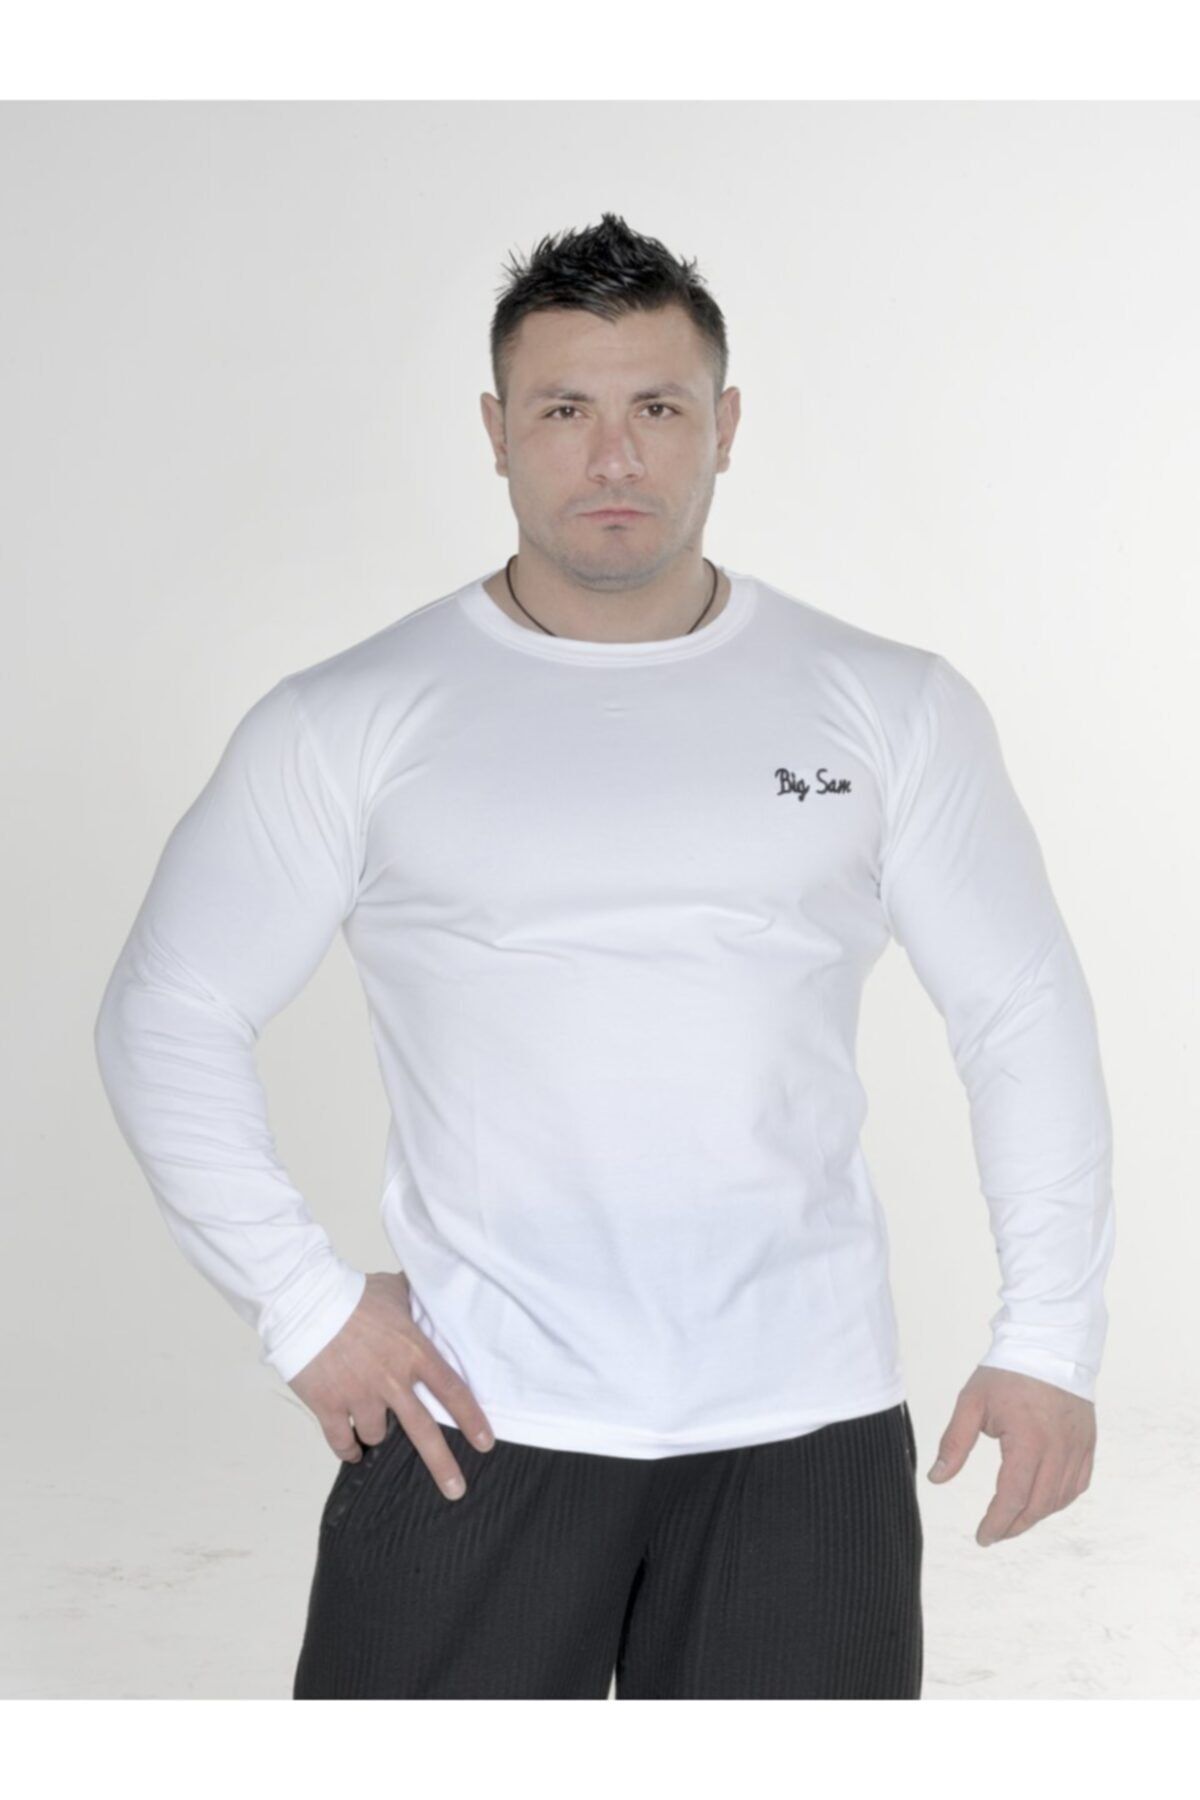 Big Sam Beyaz Pamuklu Slim Fit Sweatshirt 4589